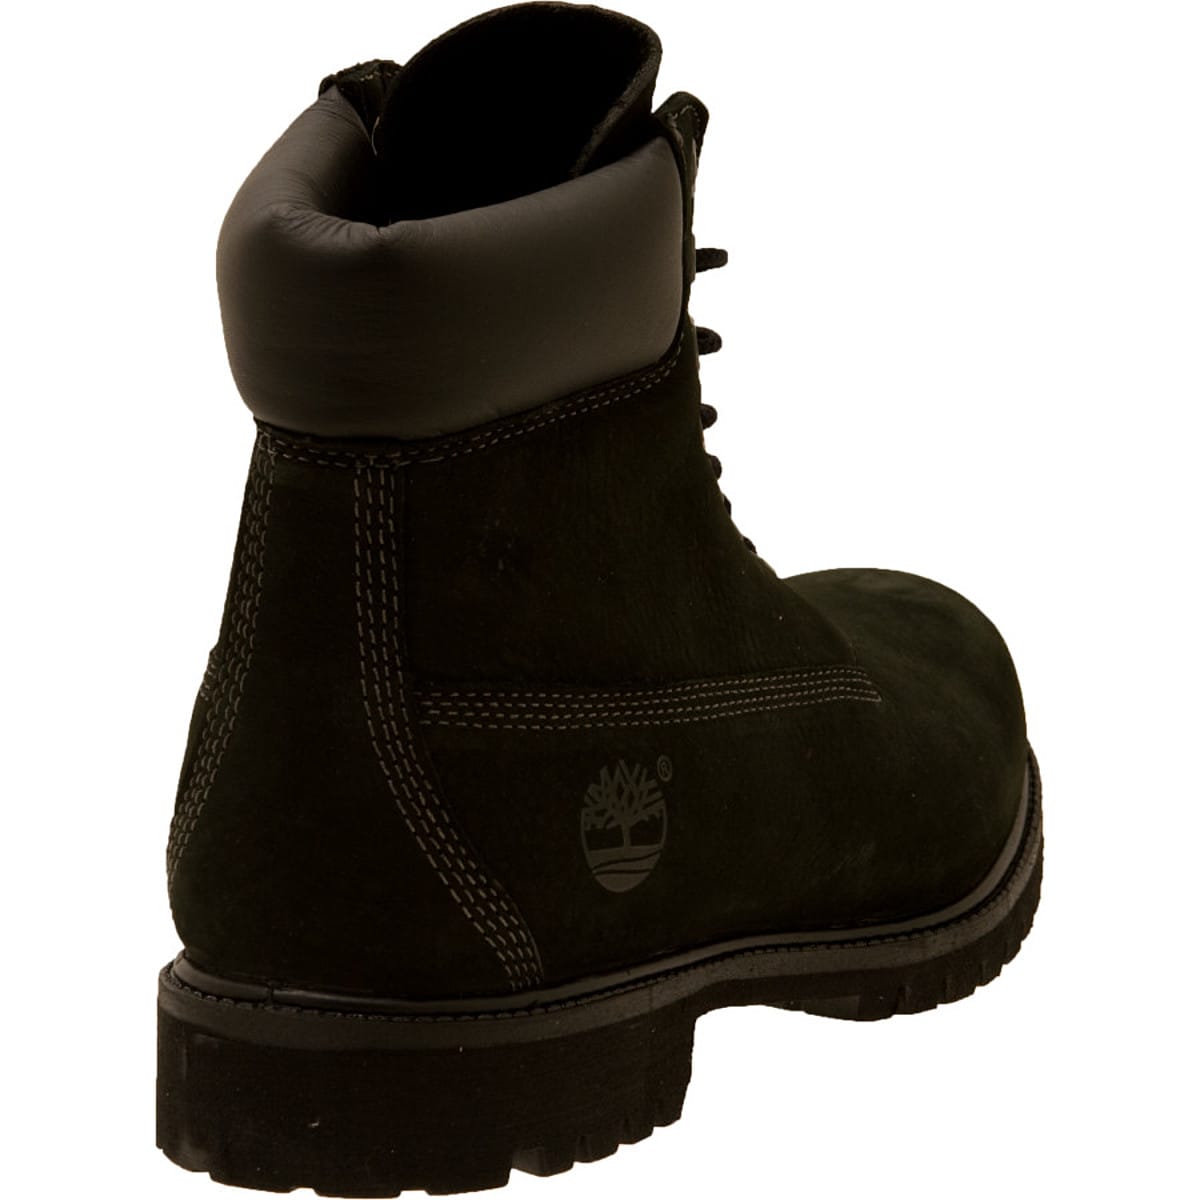 Timberland Premium Classic 6in Boot - Men's -